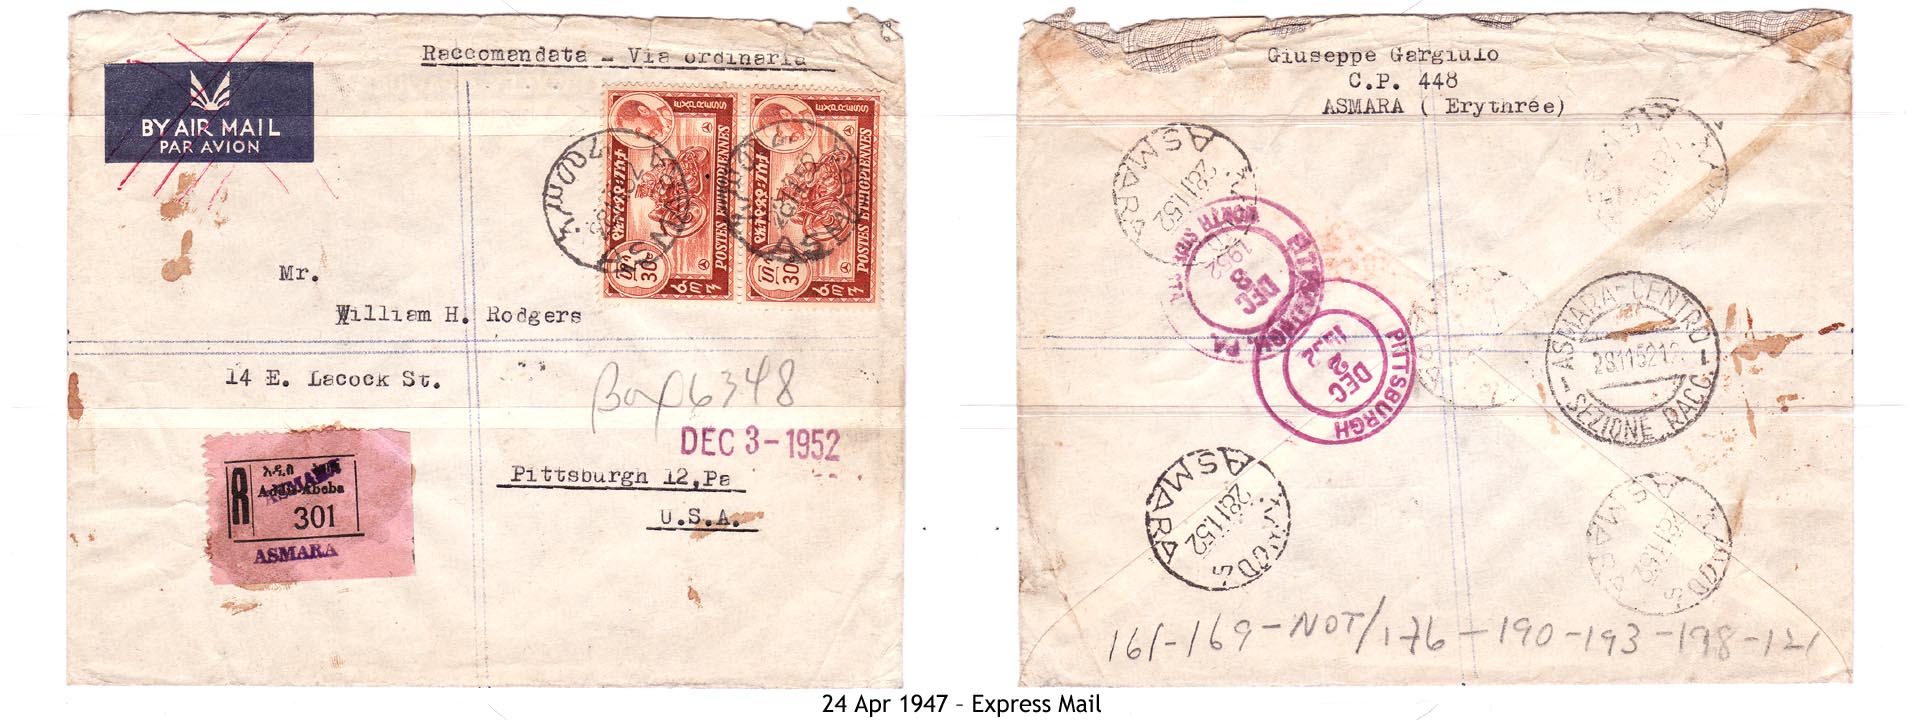 19470424 – Express Mail